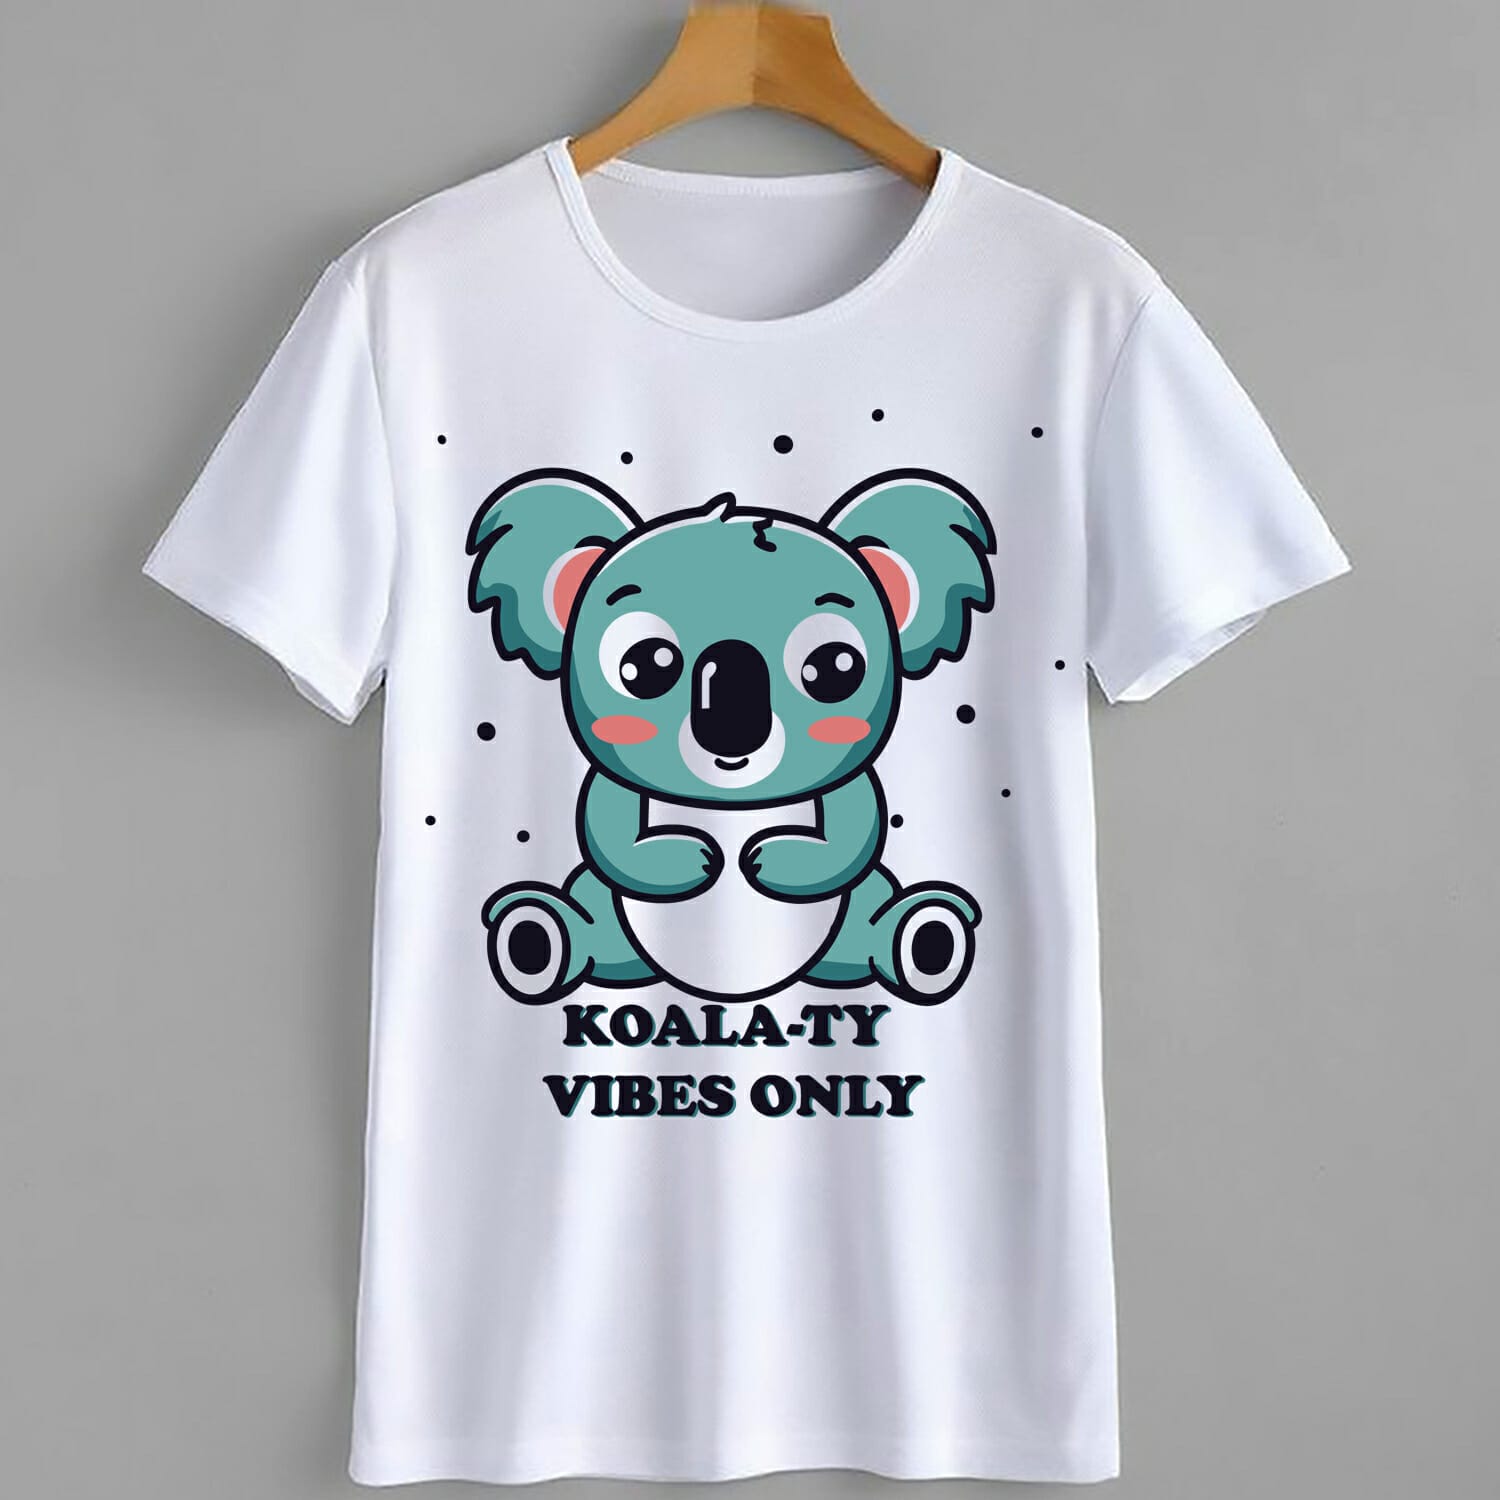 Koala Ty vibes only funny tshirt design